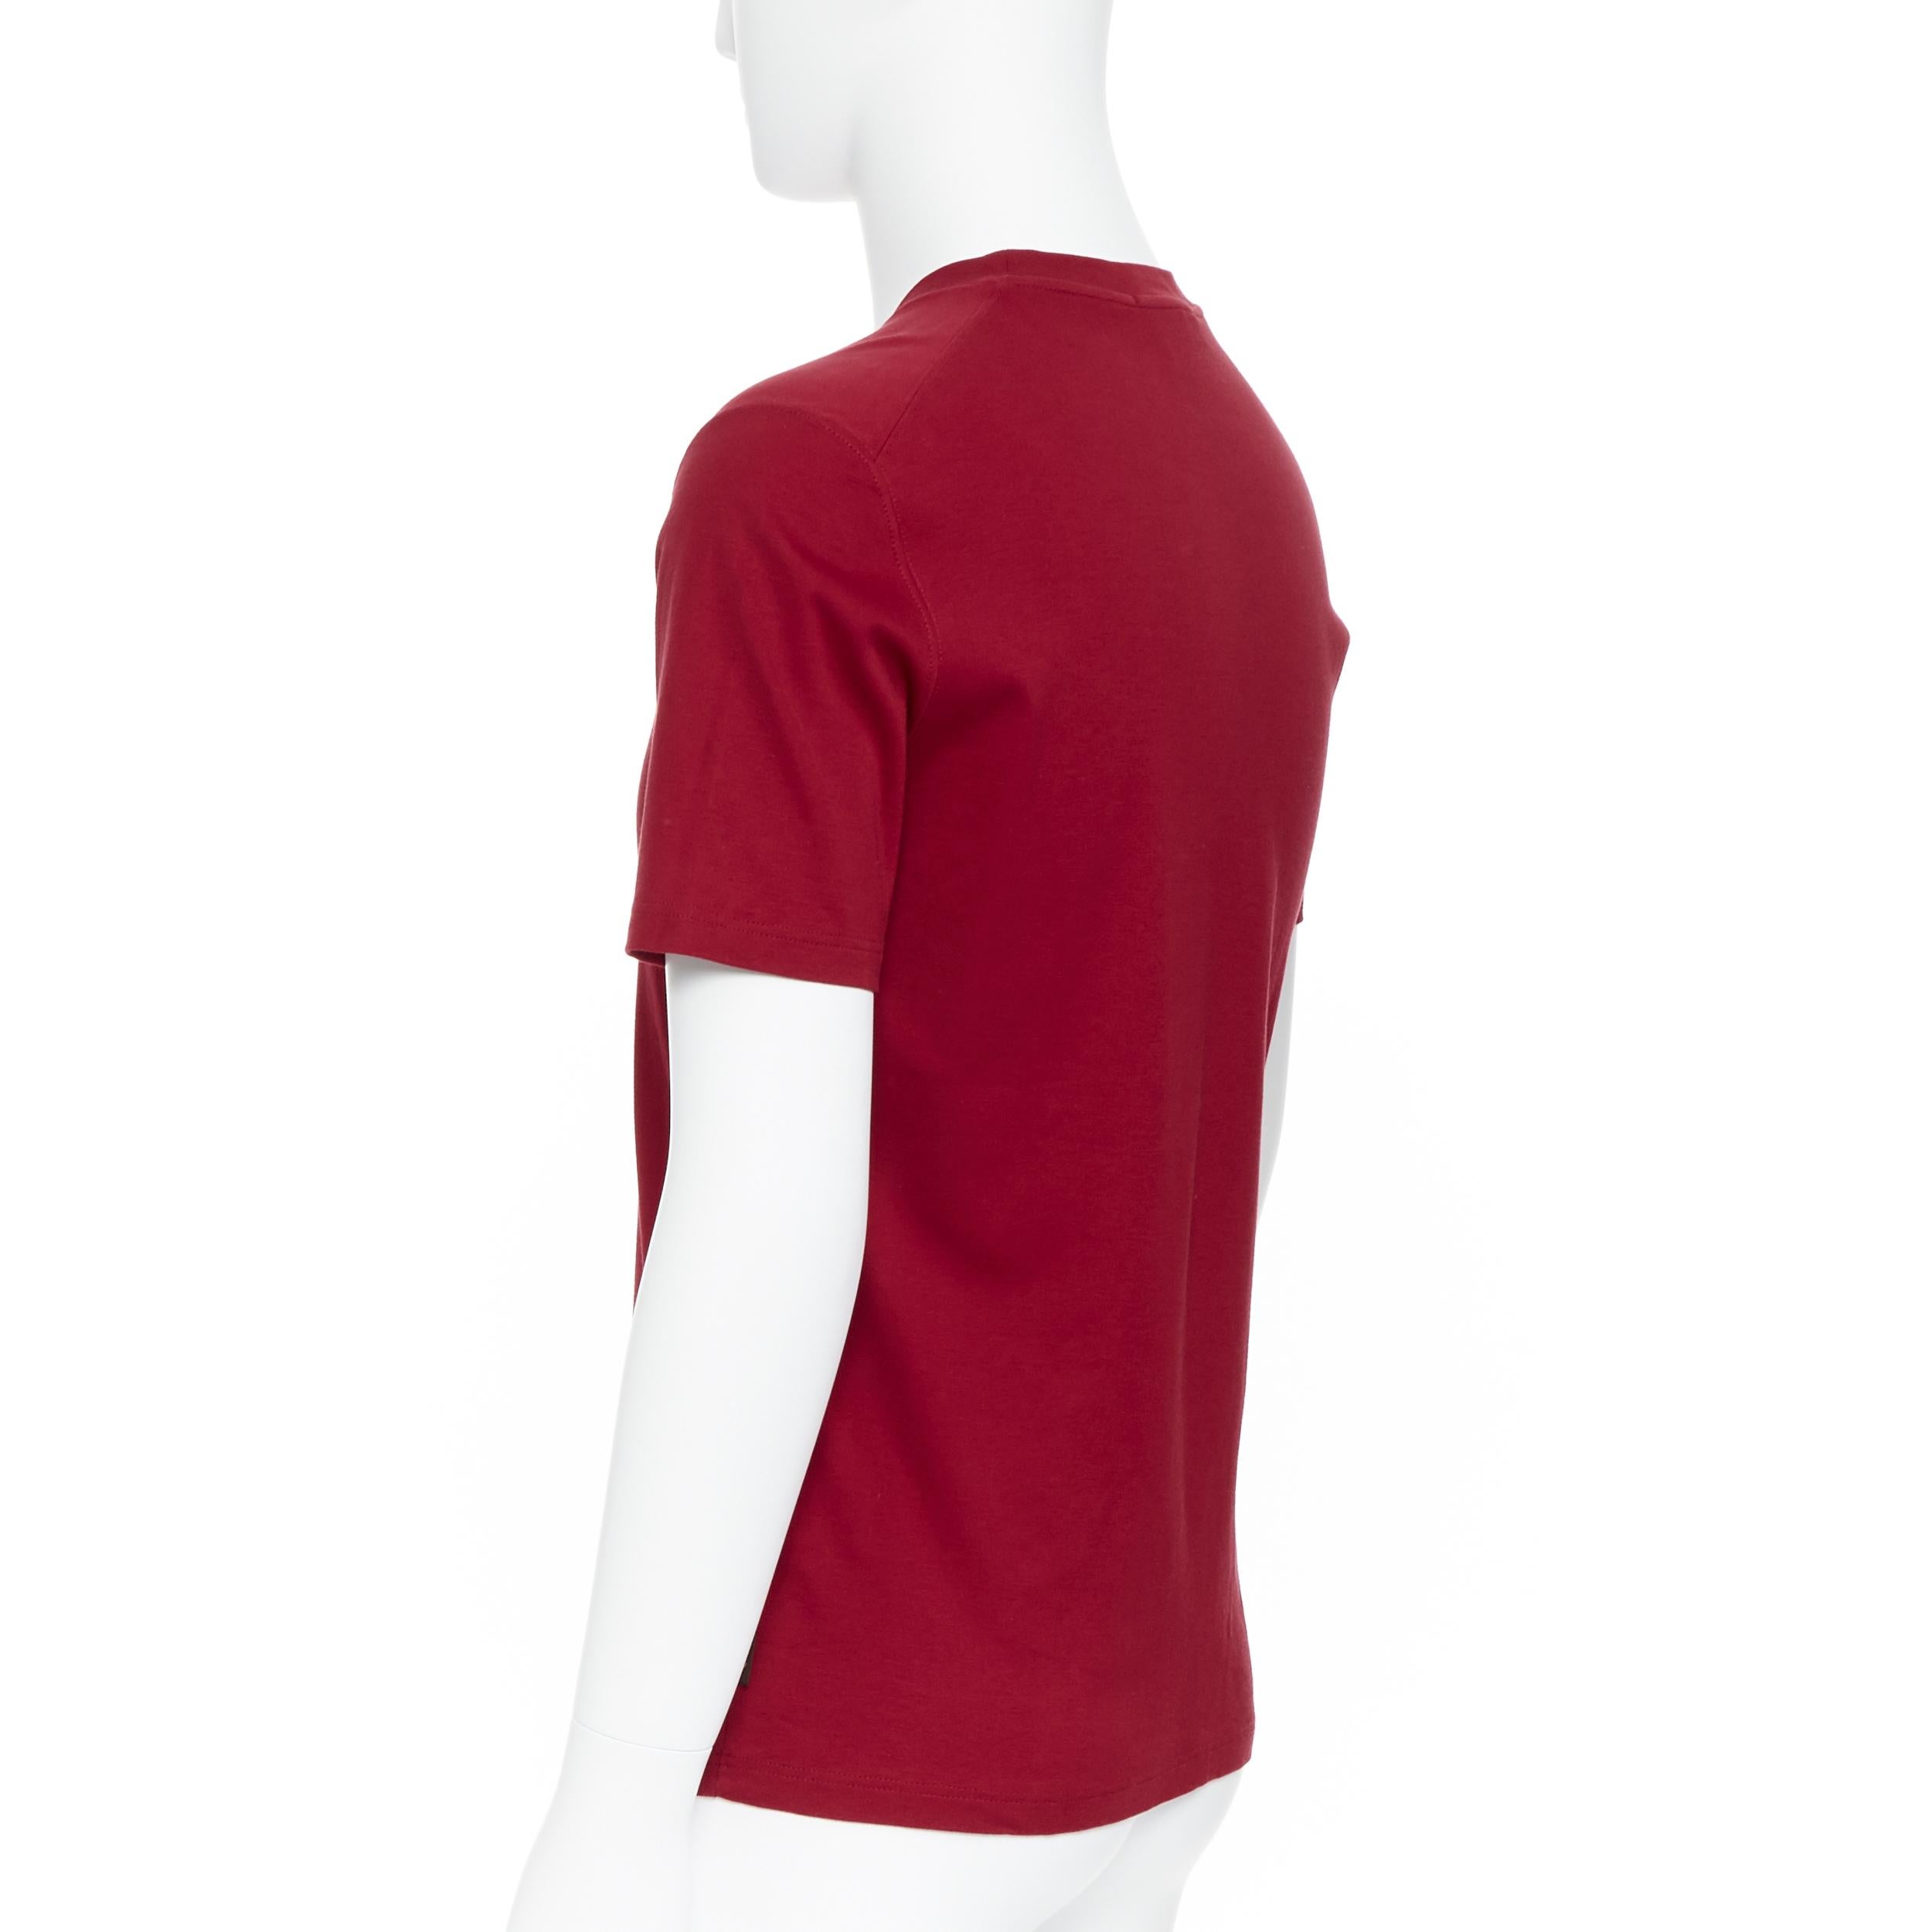 LOUIS VUITTON 100% cotton red crew neck short sleeve LV logo tab t-shirt S 1